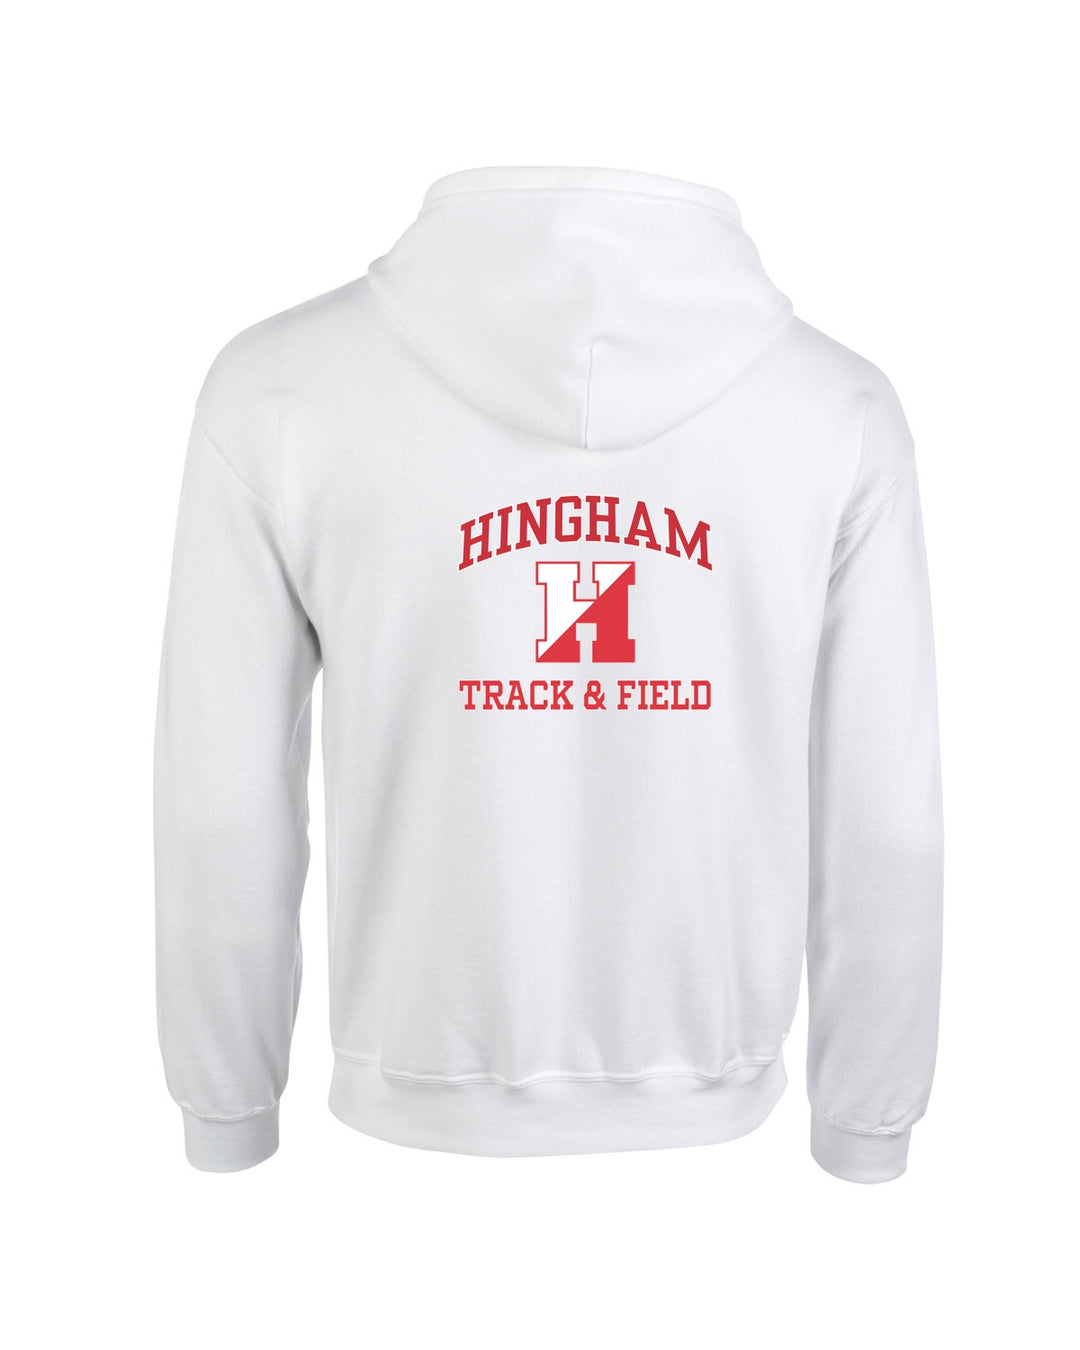 Hingham Winter Track - Gildan Full Hooded Sweatshirt (G186)